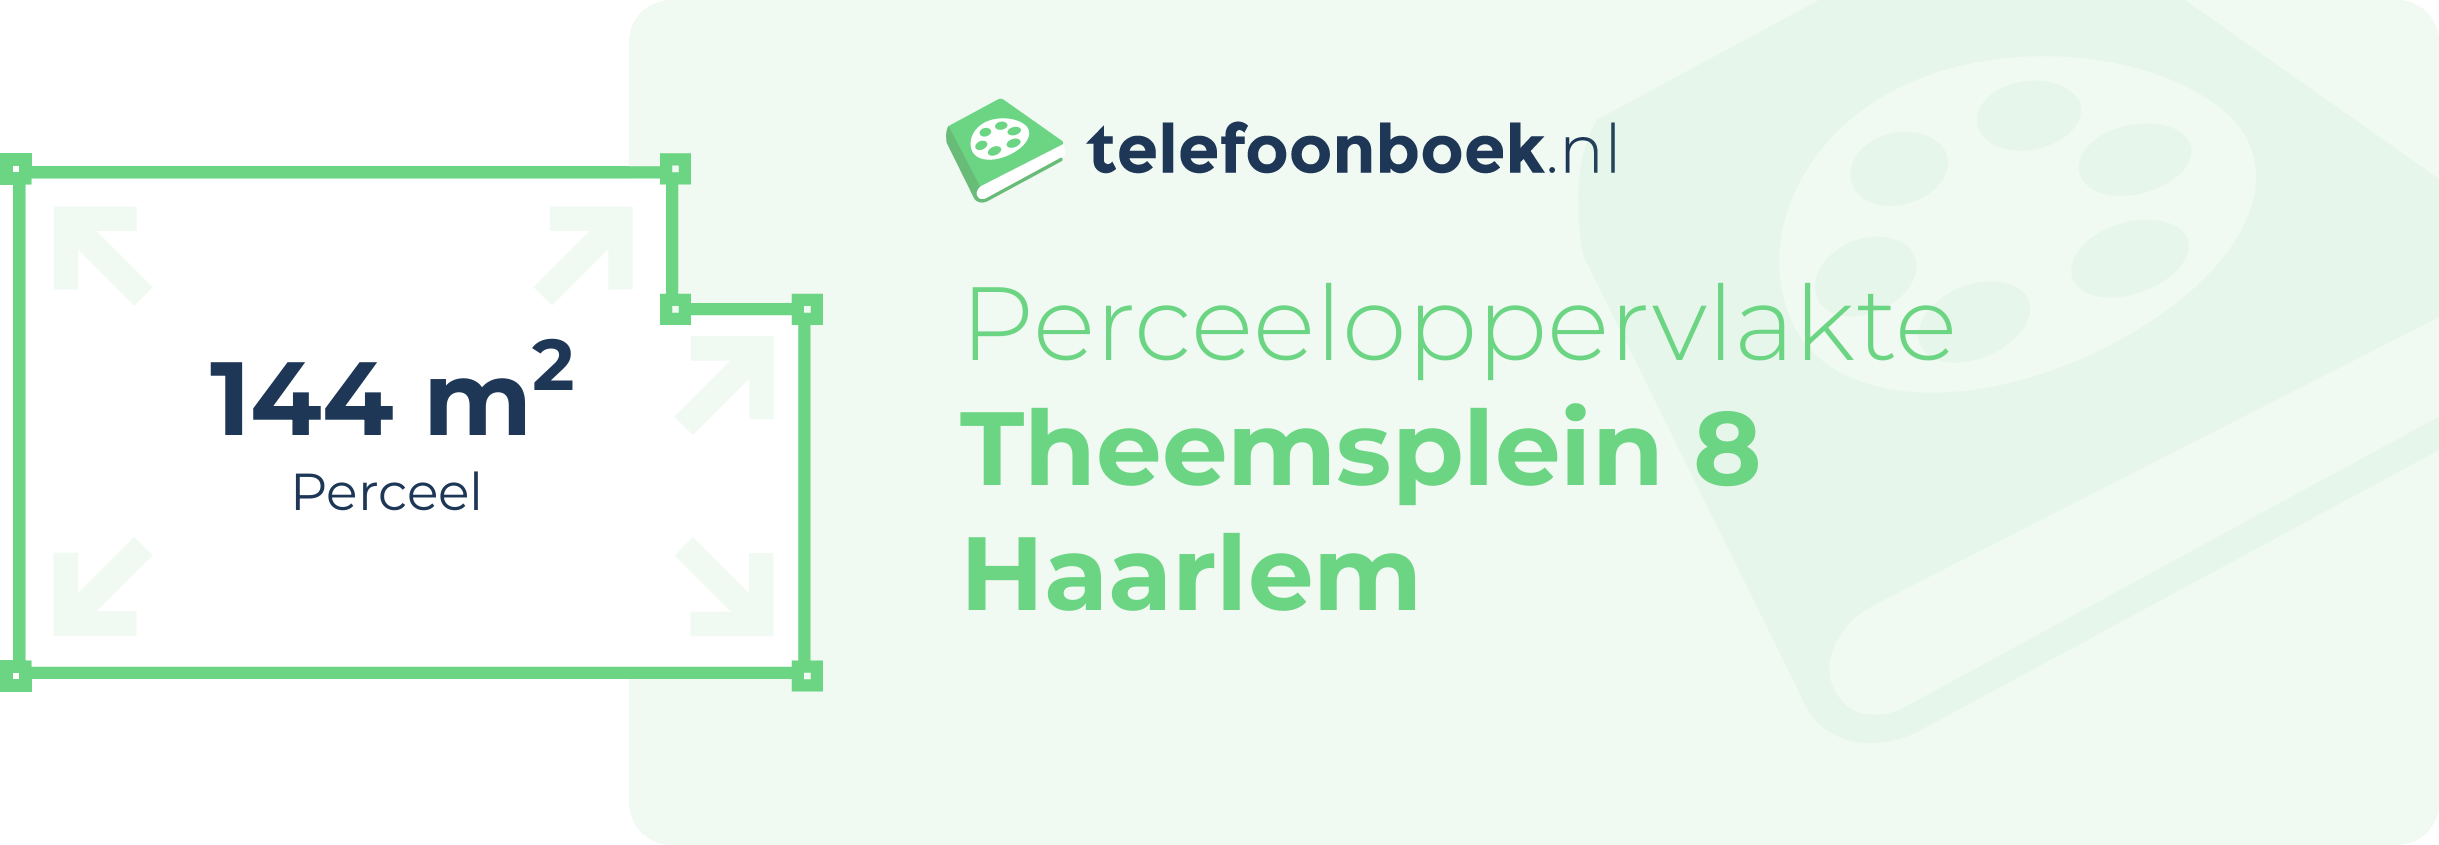 Perceeloppervlakte Theemsplein 8 Haarlem